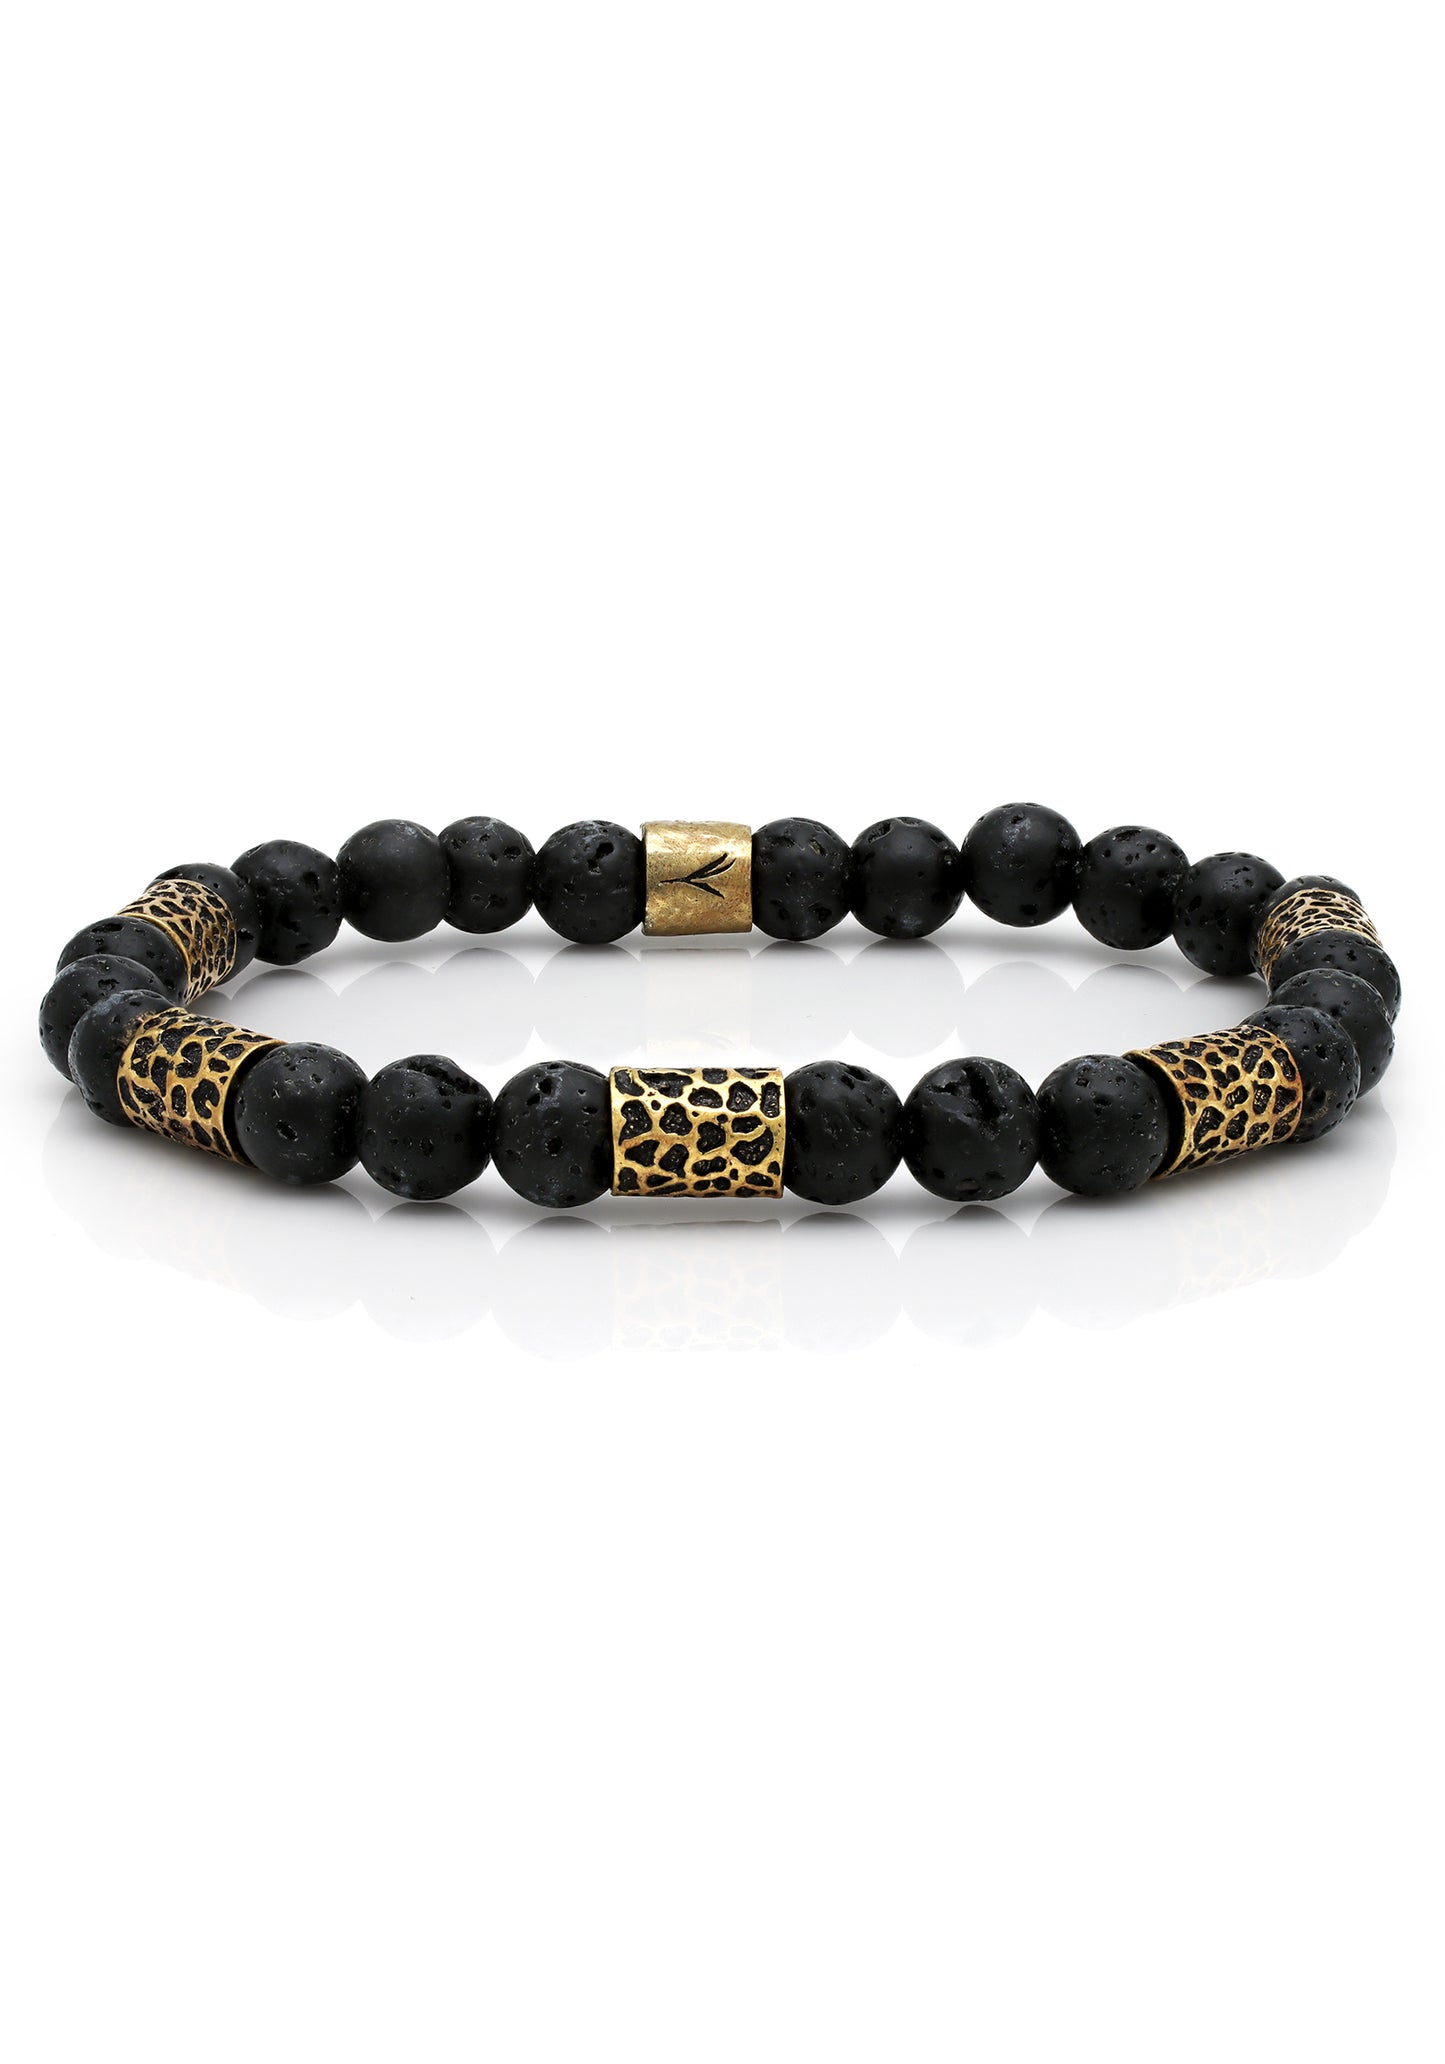 Leopard Lava Stone Stretch Bracelet (Strength and Confidence)